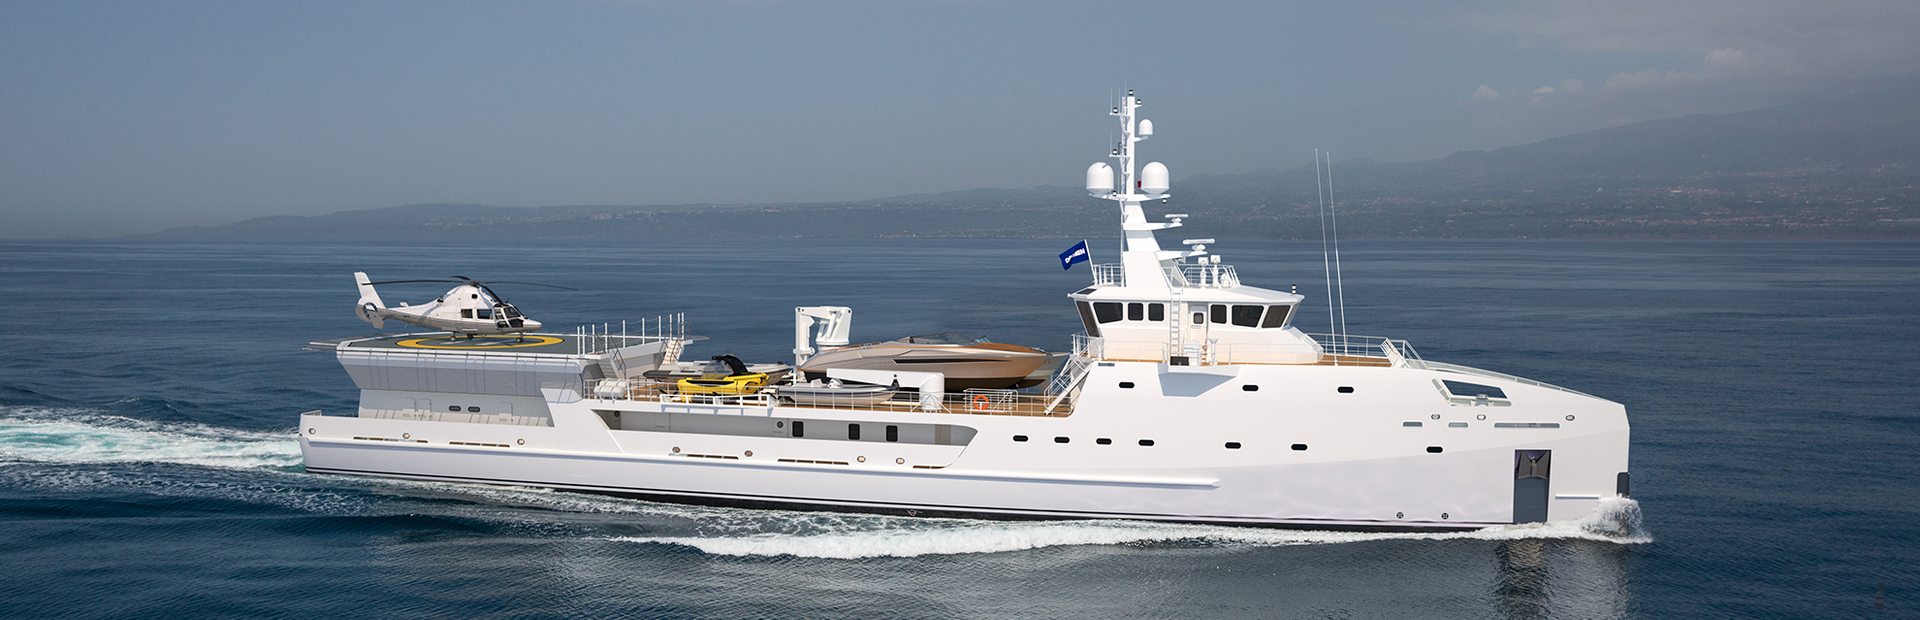 YS 6911 Yacht